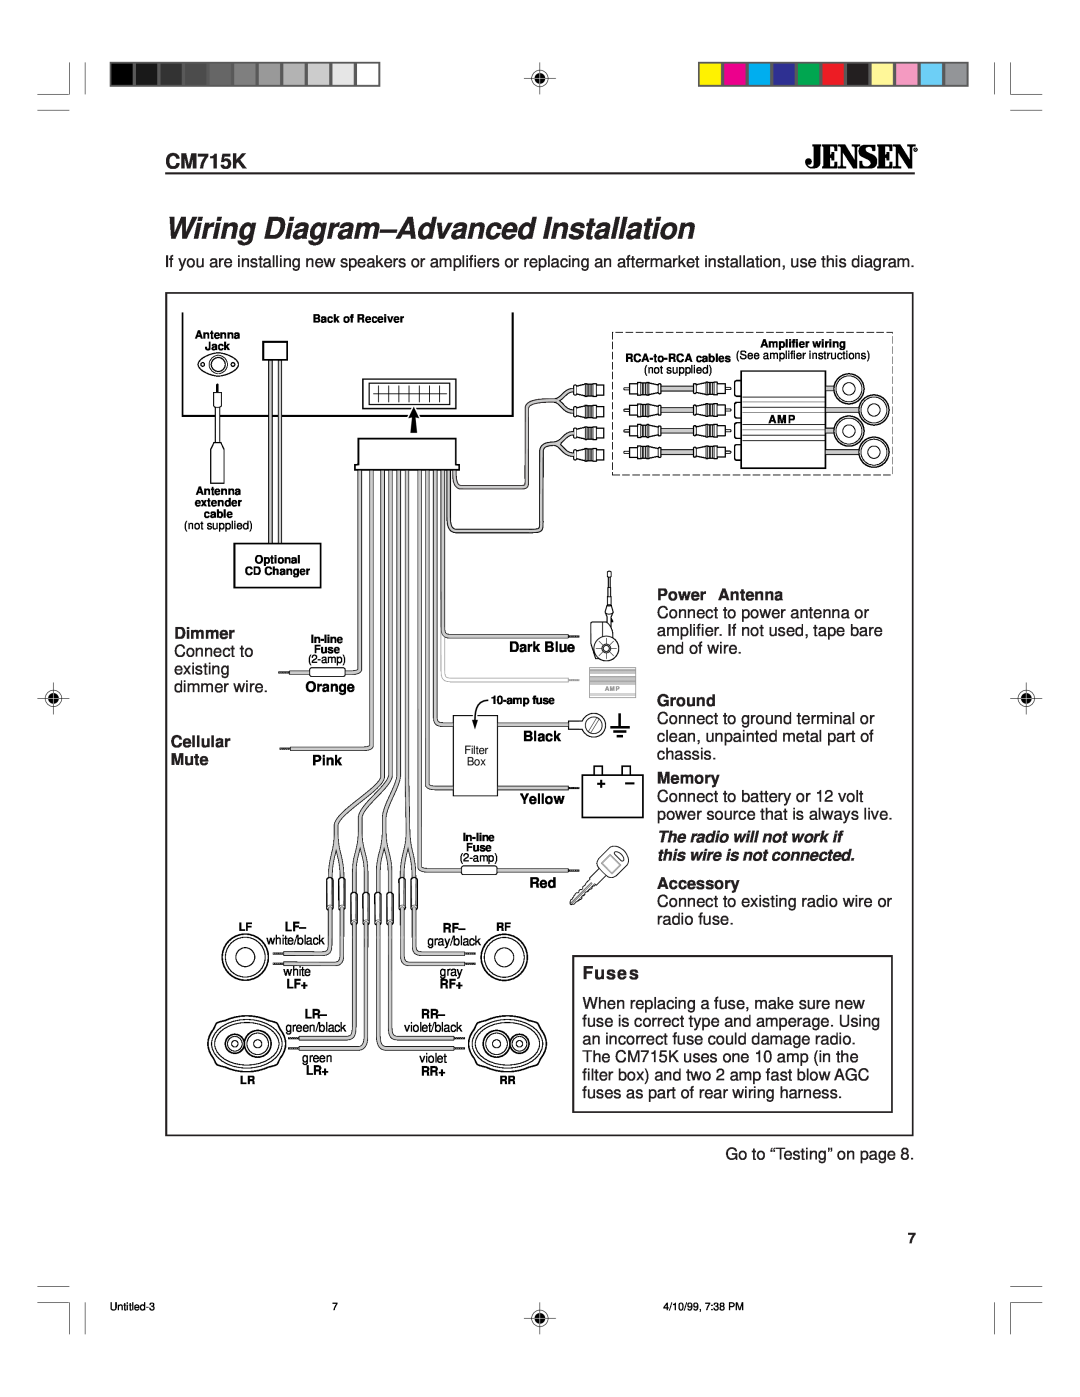 Jensen CM715K Wiring Diagram-AdvancedInstallation, Fuses, Dimmer, Connect to, existing, Power Antenna, dimmer wire, Mute 